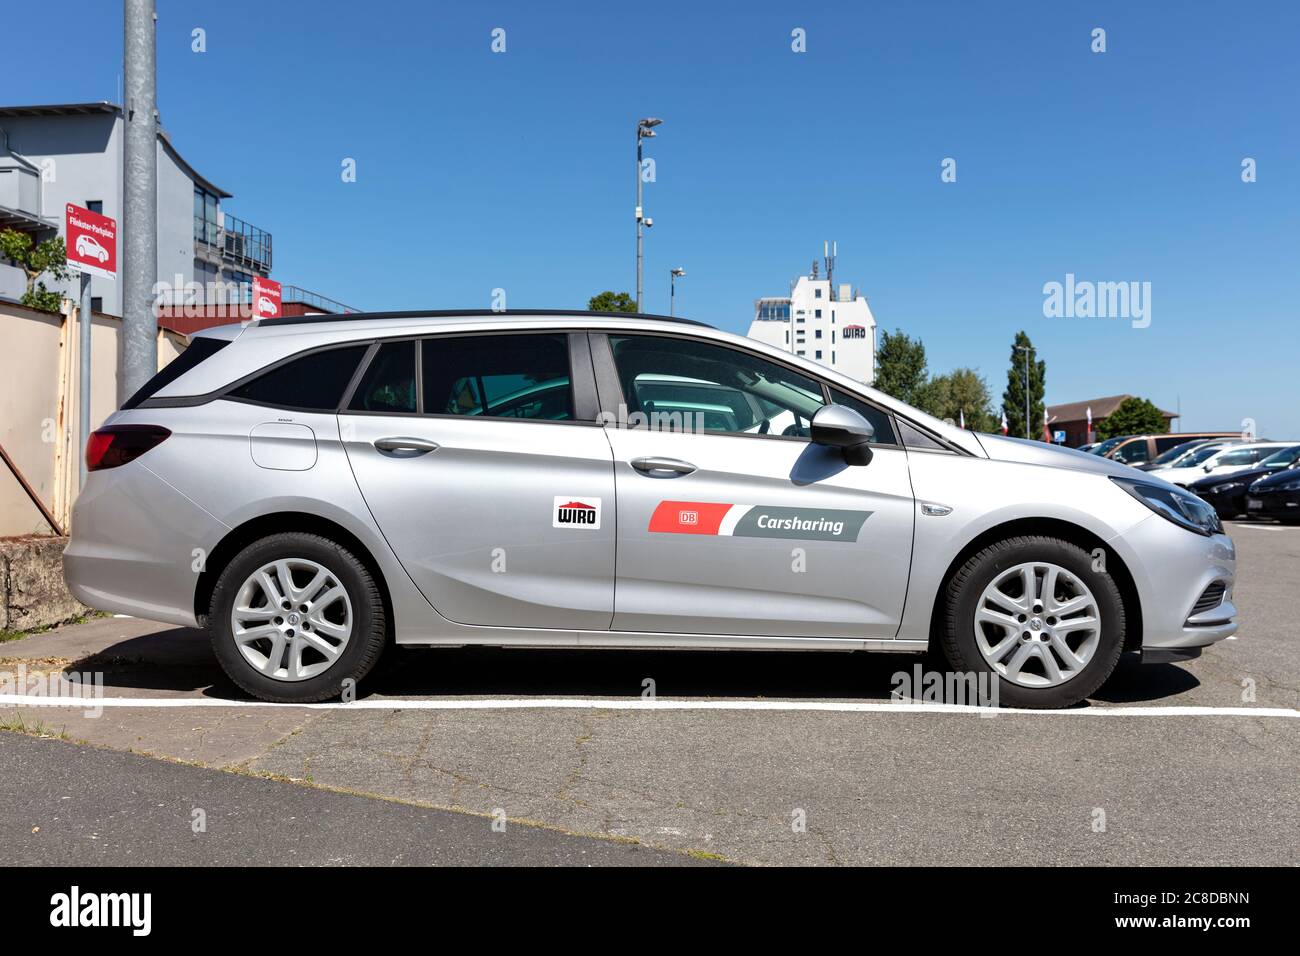 WIRO DB Carsharing Opel Astra Stock Photo